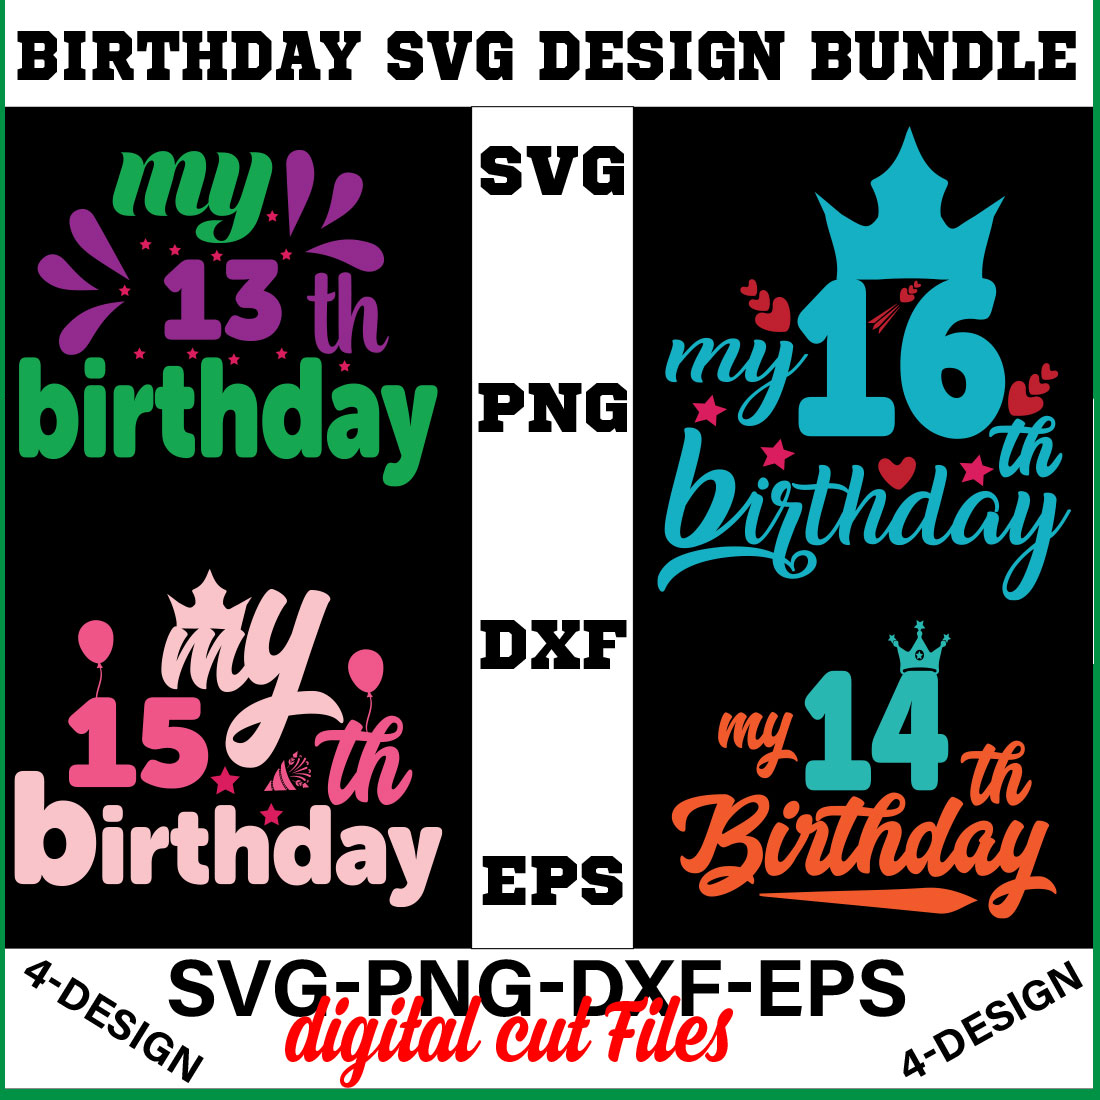 birthday svg design bundle Happy birthday svg bundle hand lettered birthday svg birthday party svg Volume-20 cover image.